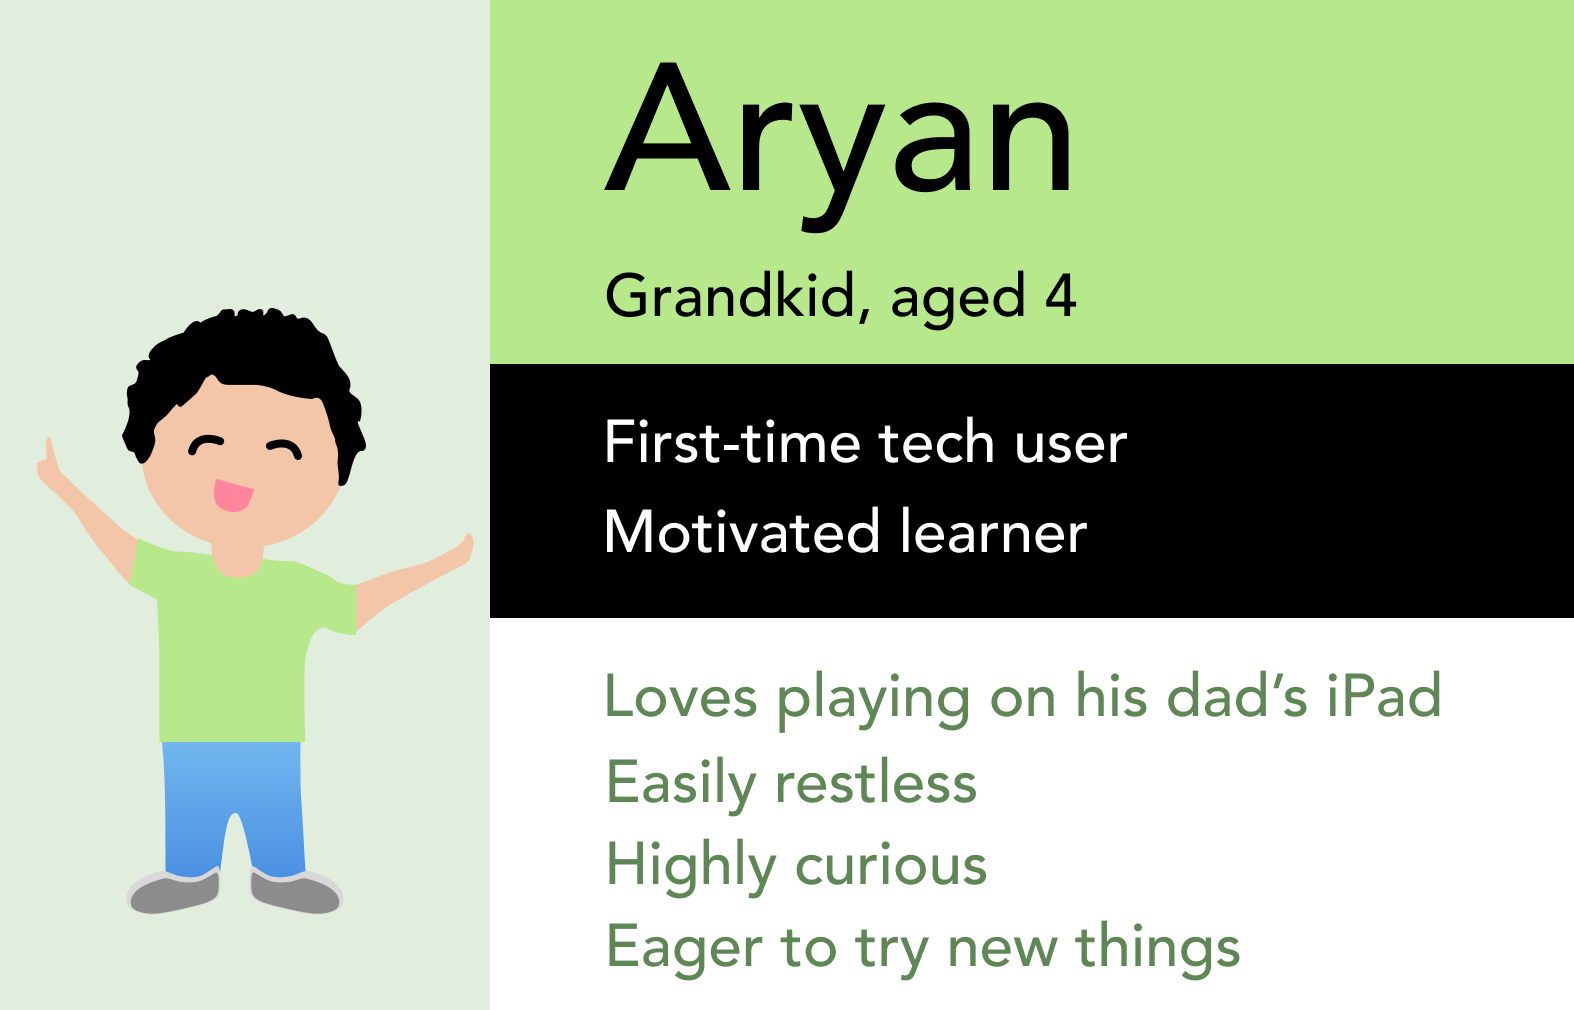 Persona 2: Aryan